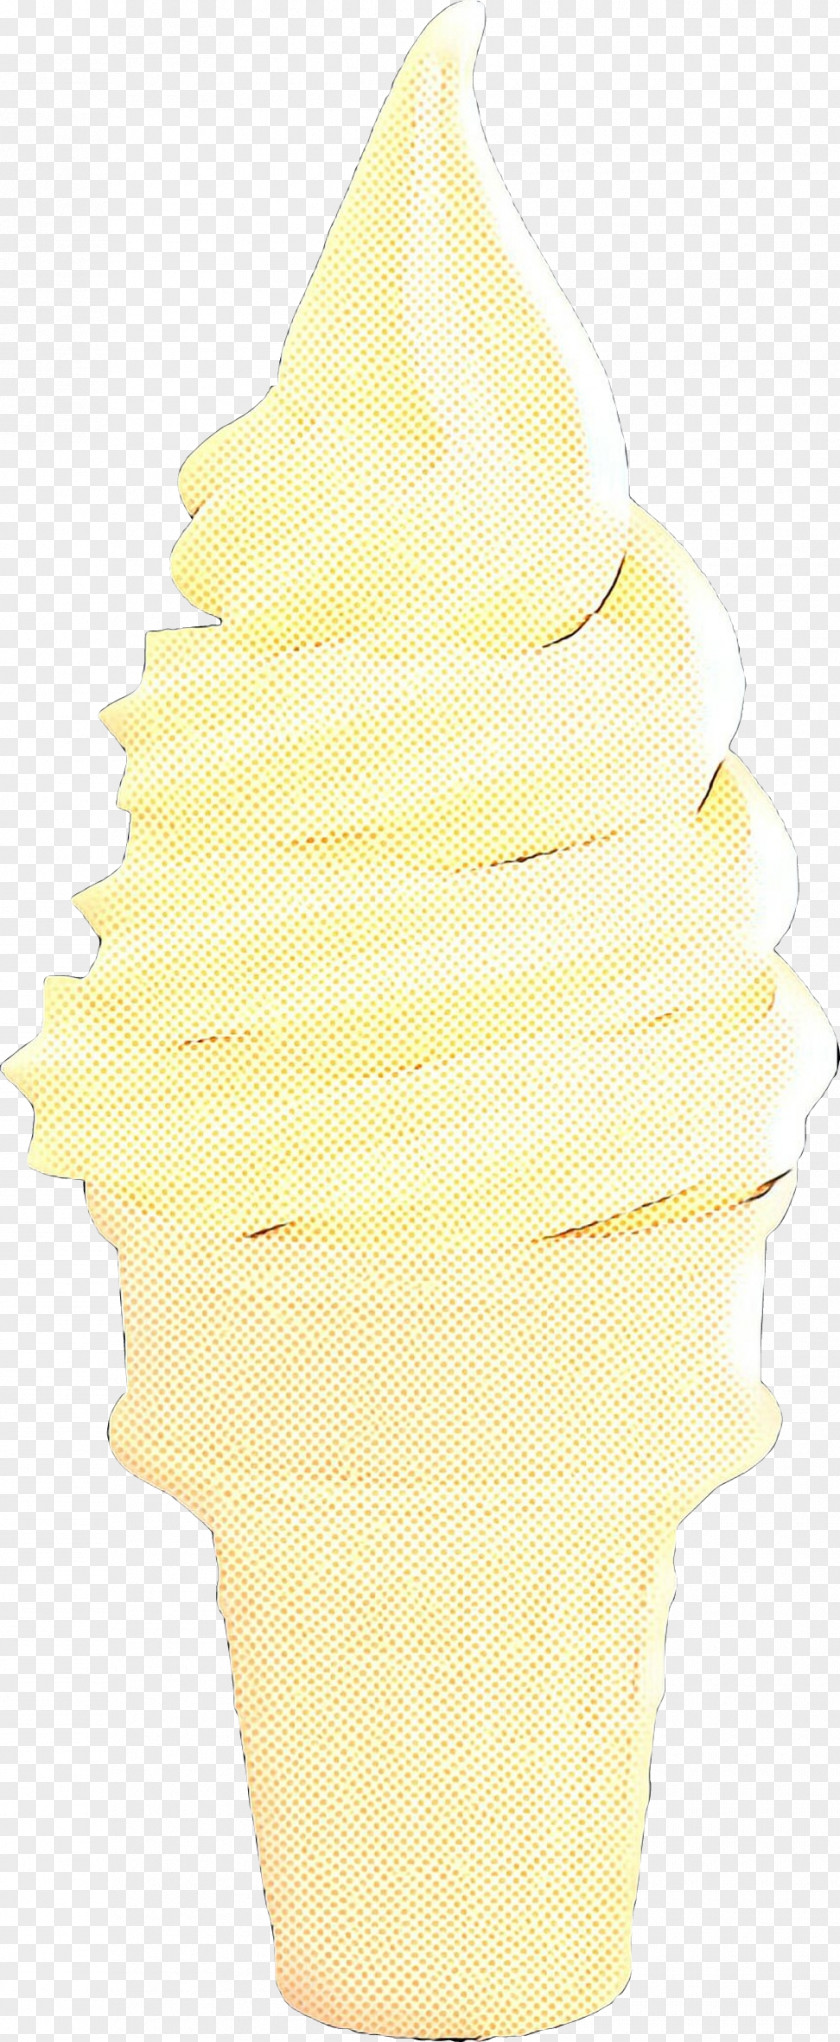 Soft Serve Ice Creams Cream Cone Background PNG